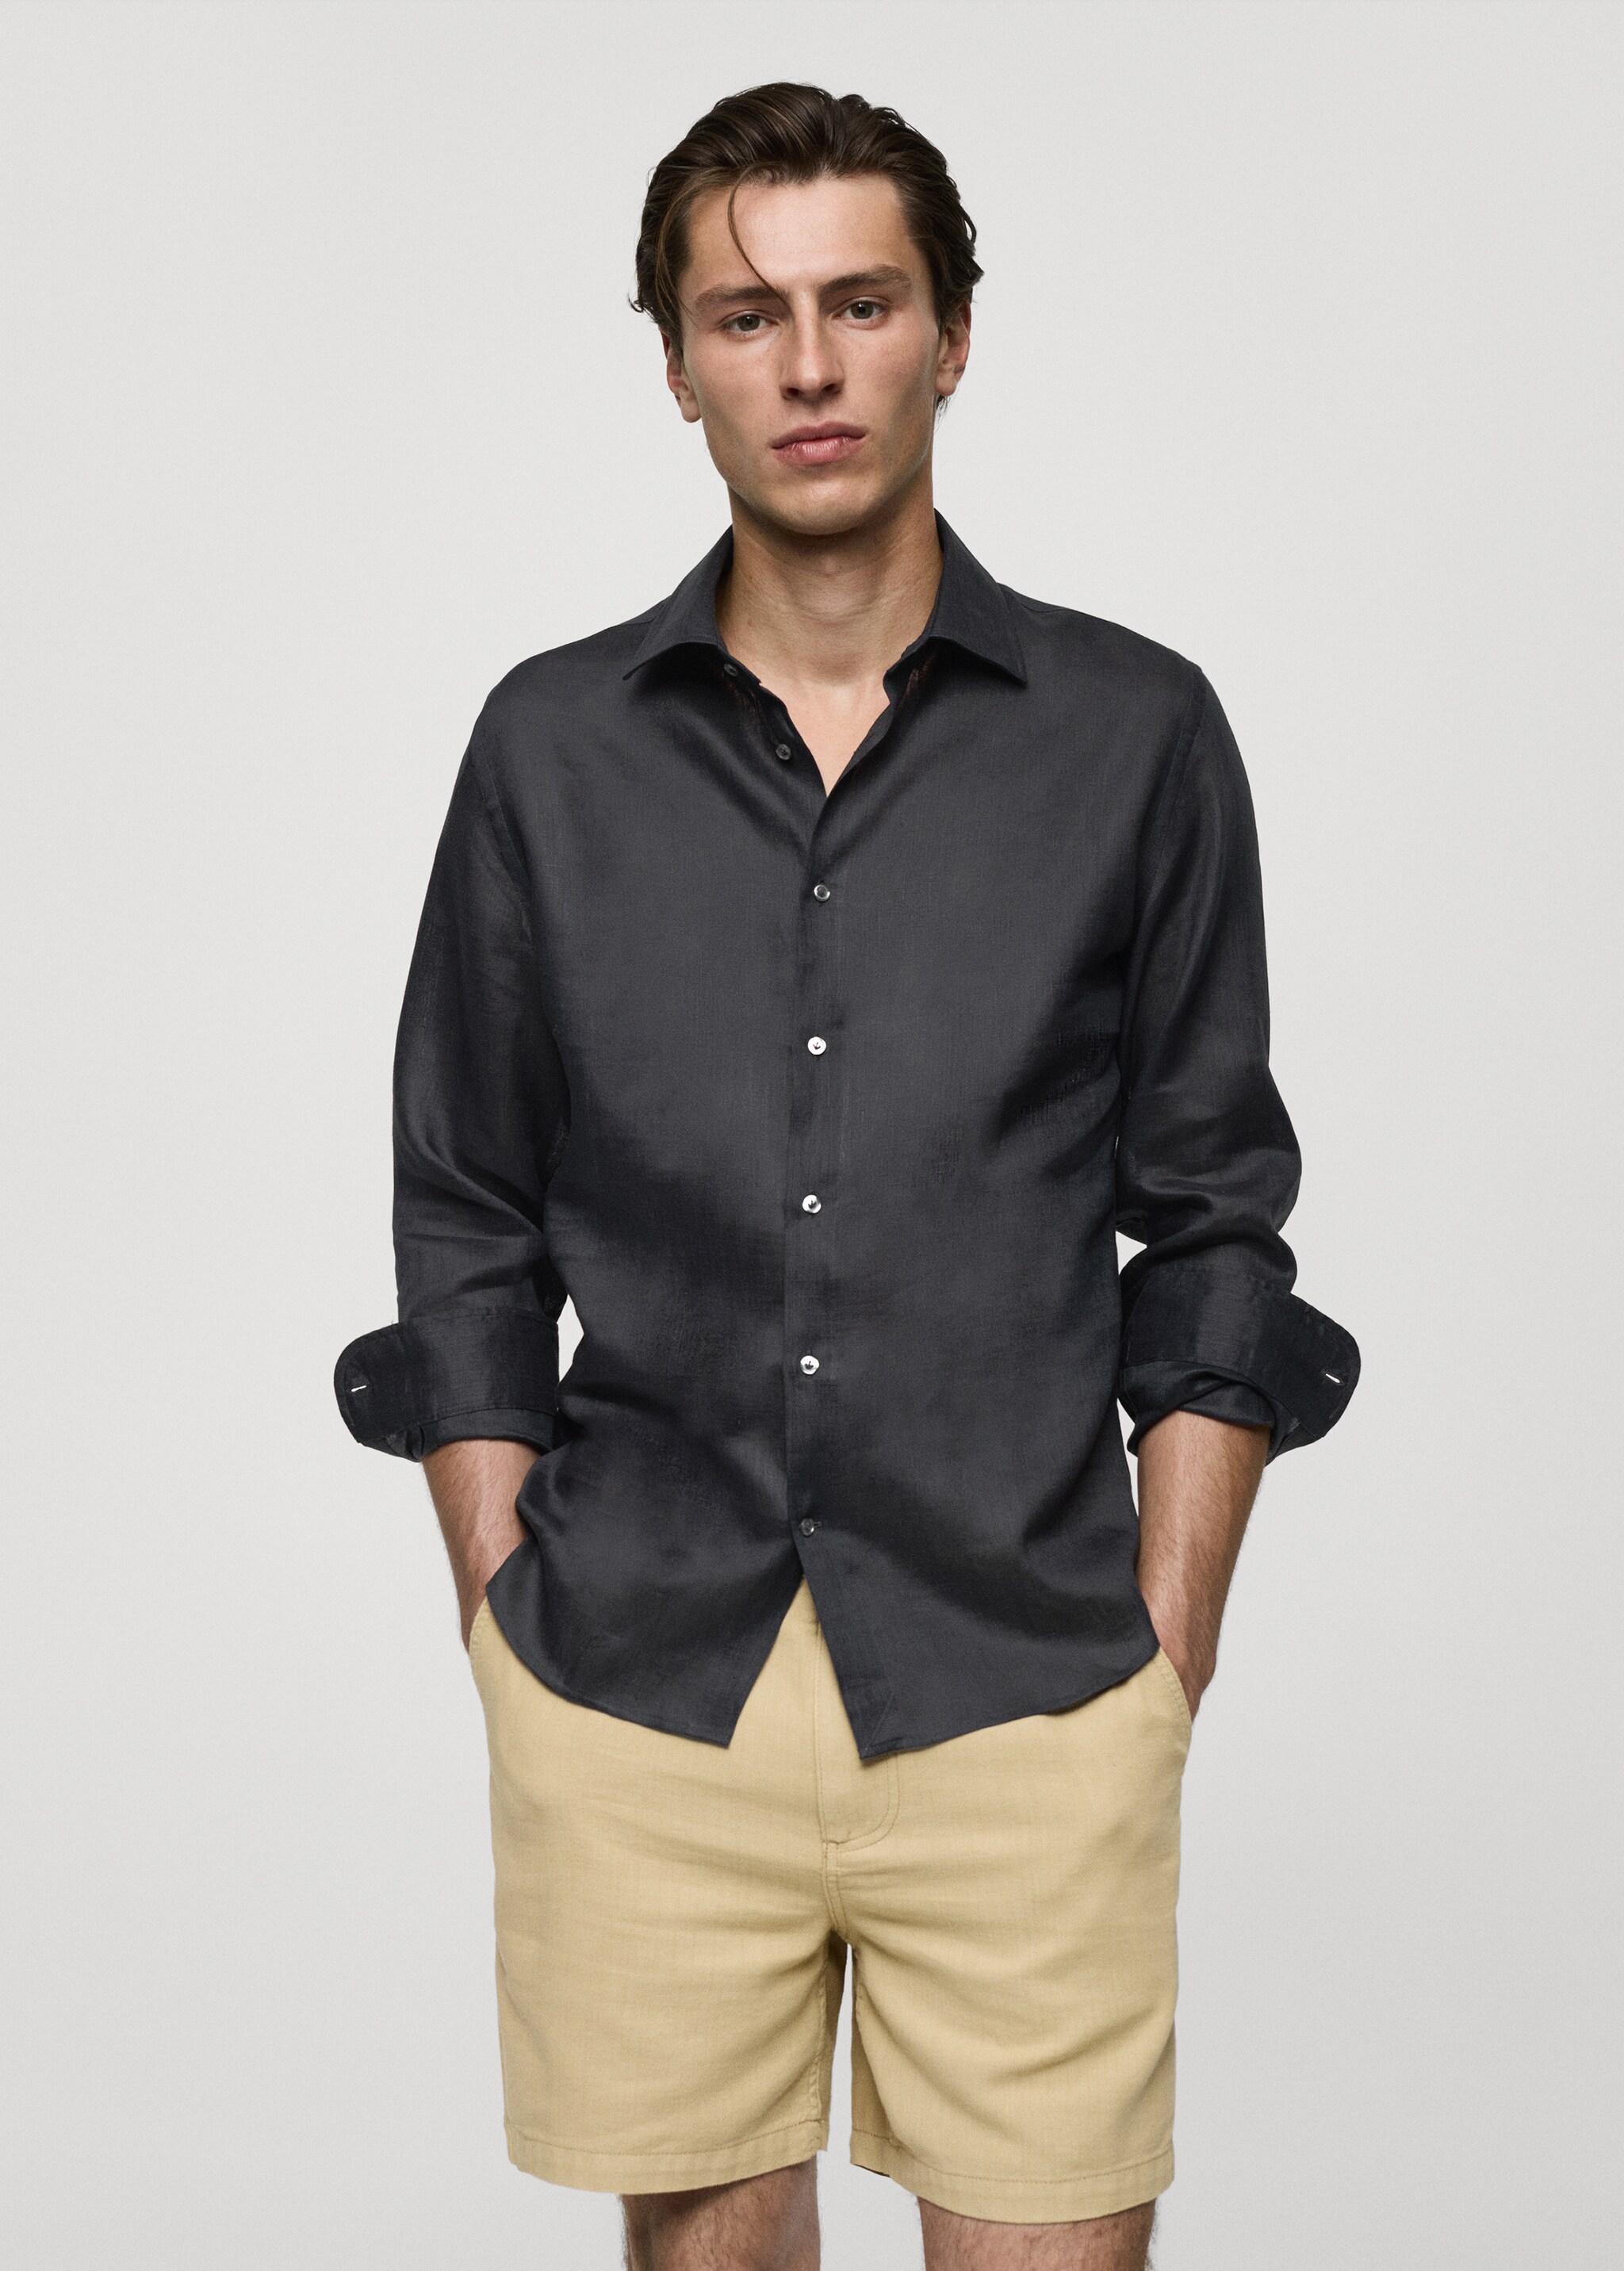 100% linen regular-fit shirt - Medium plane